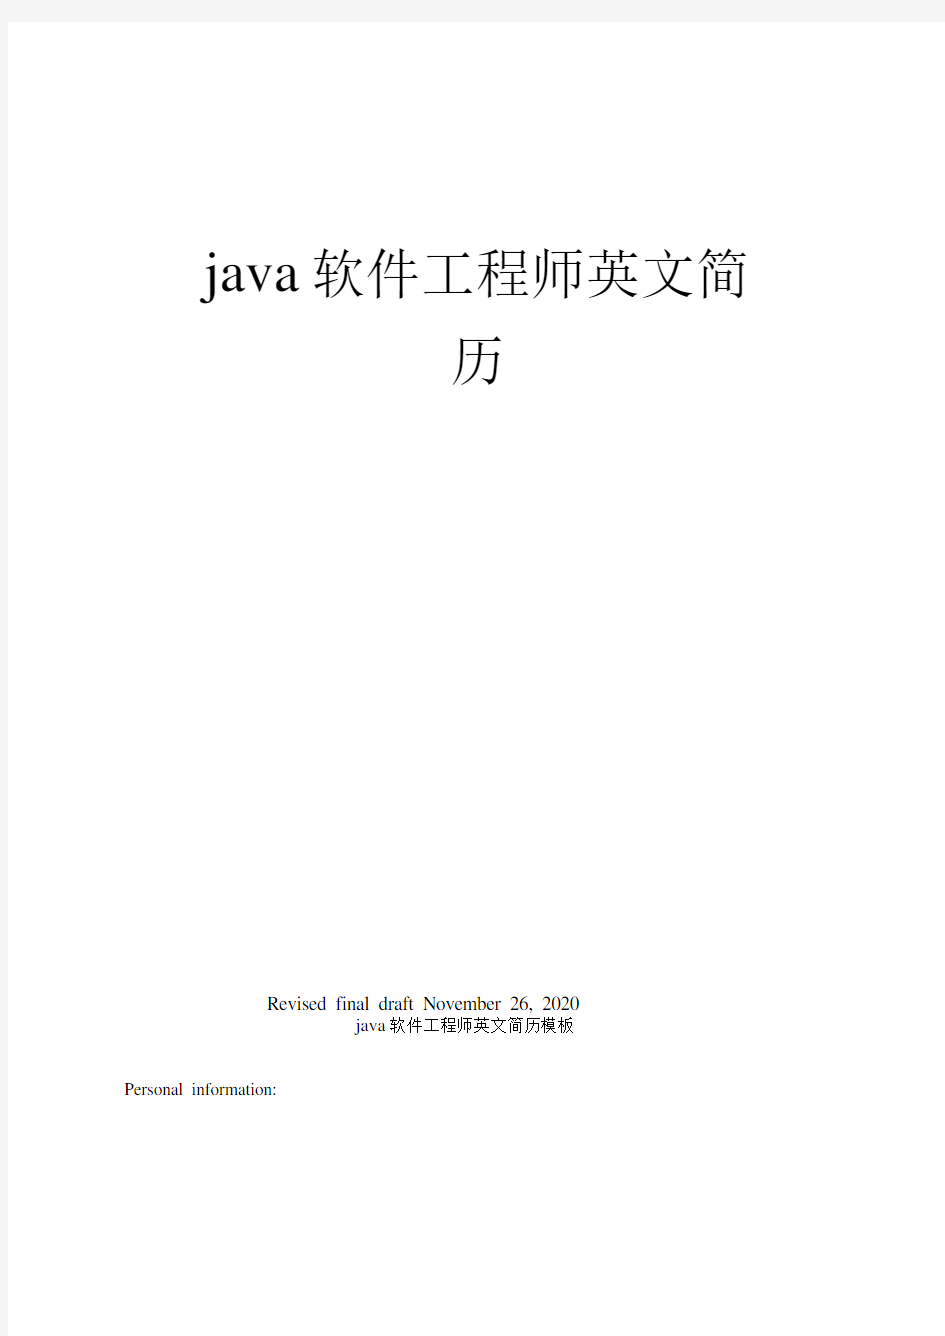 java软件工程师英文简历